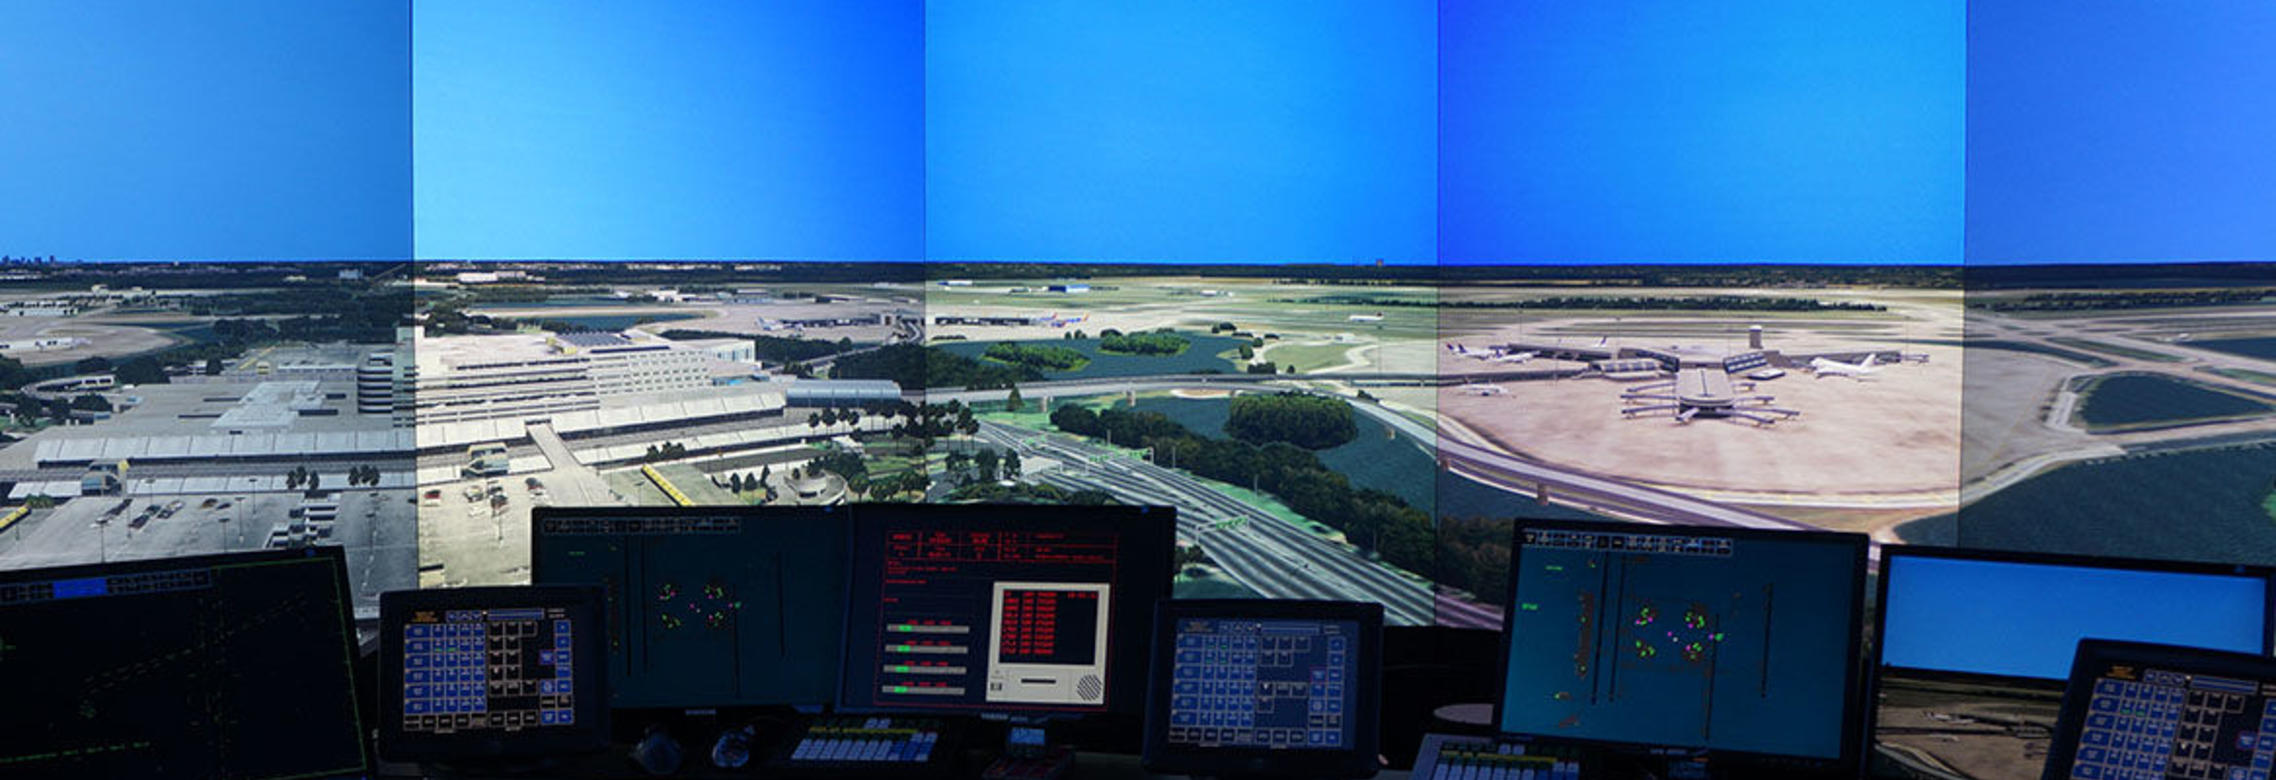 panasonic-projectors-case-study-adacel-systems-faa-flight-simulator-image